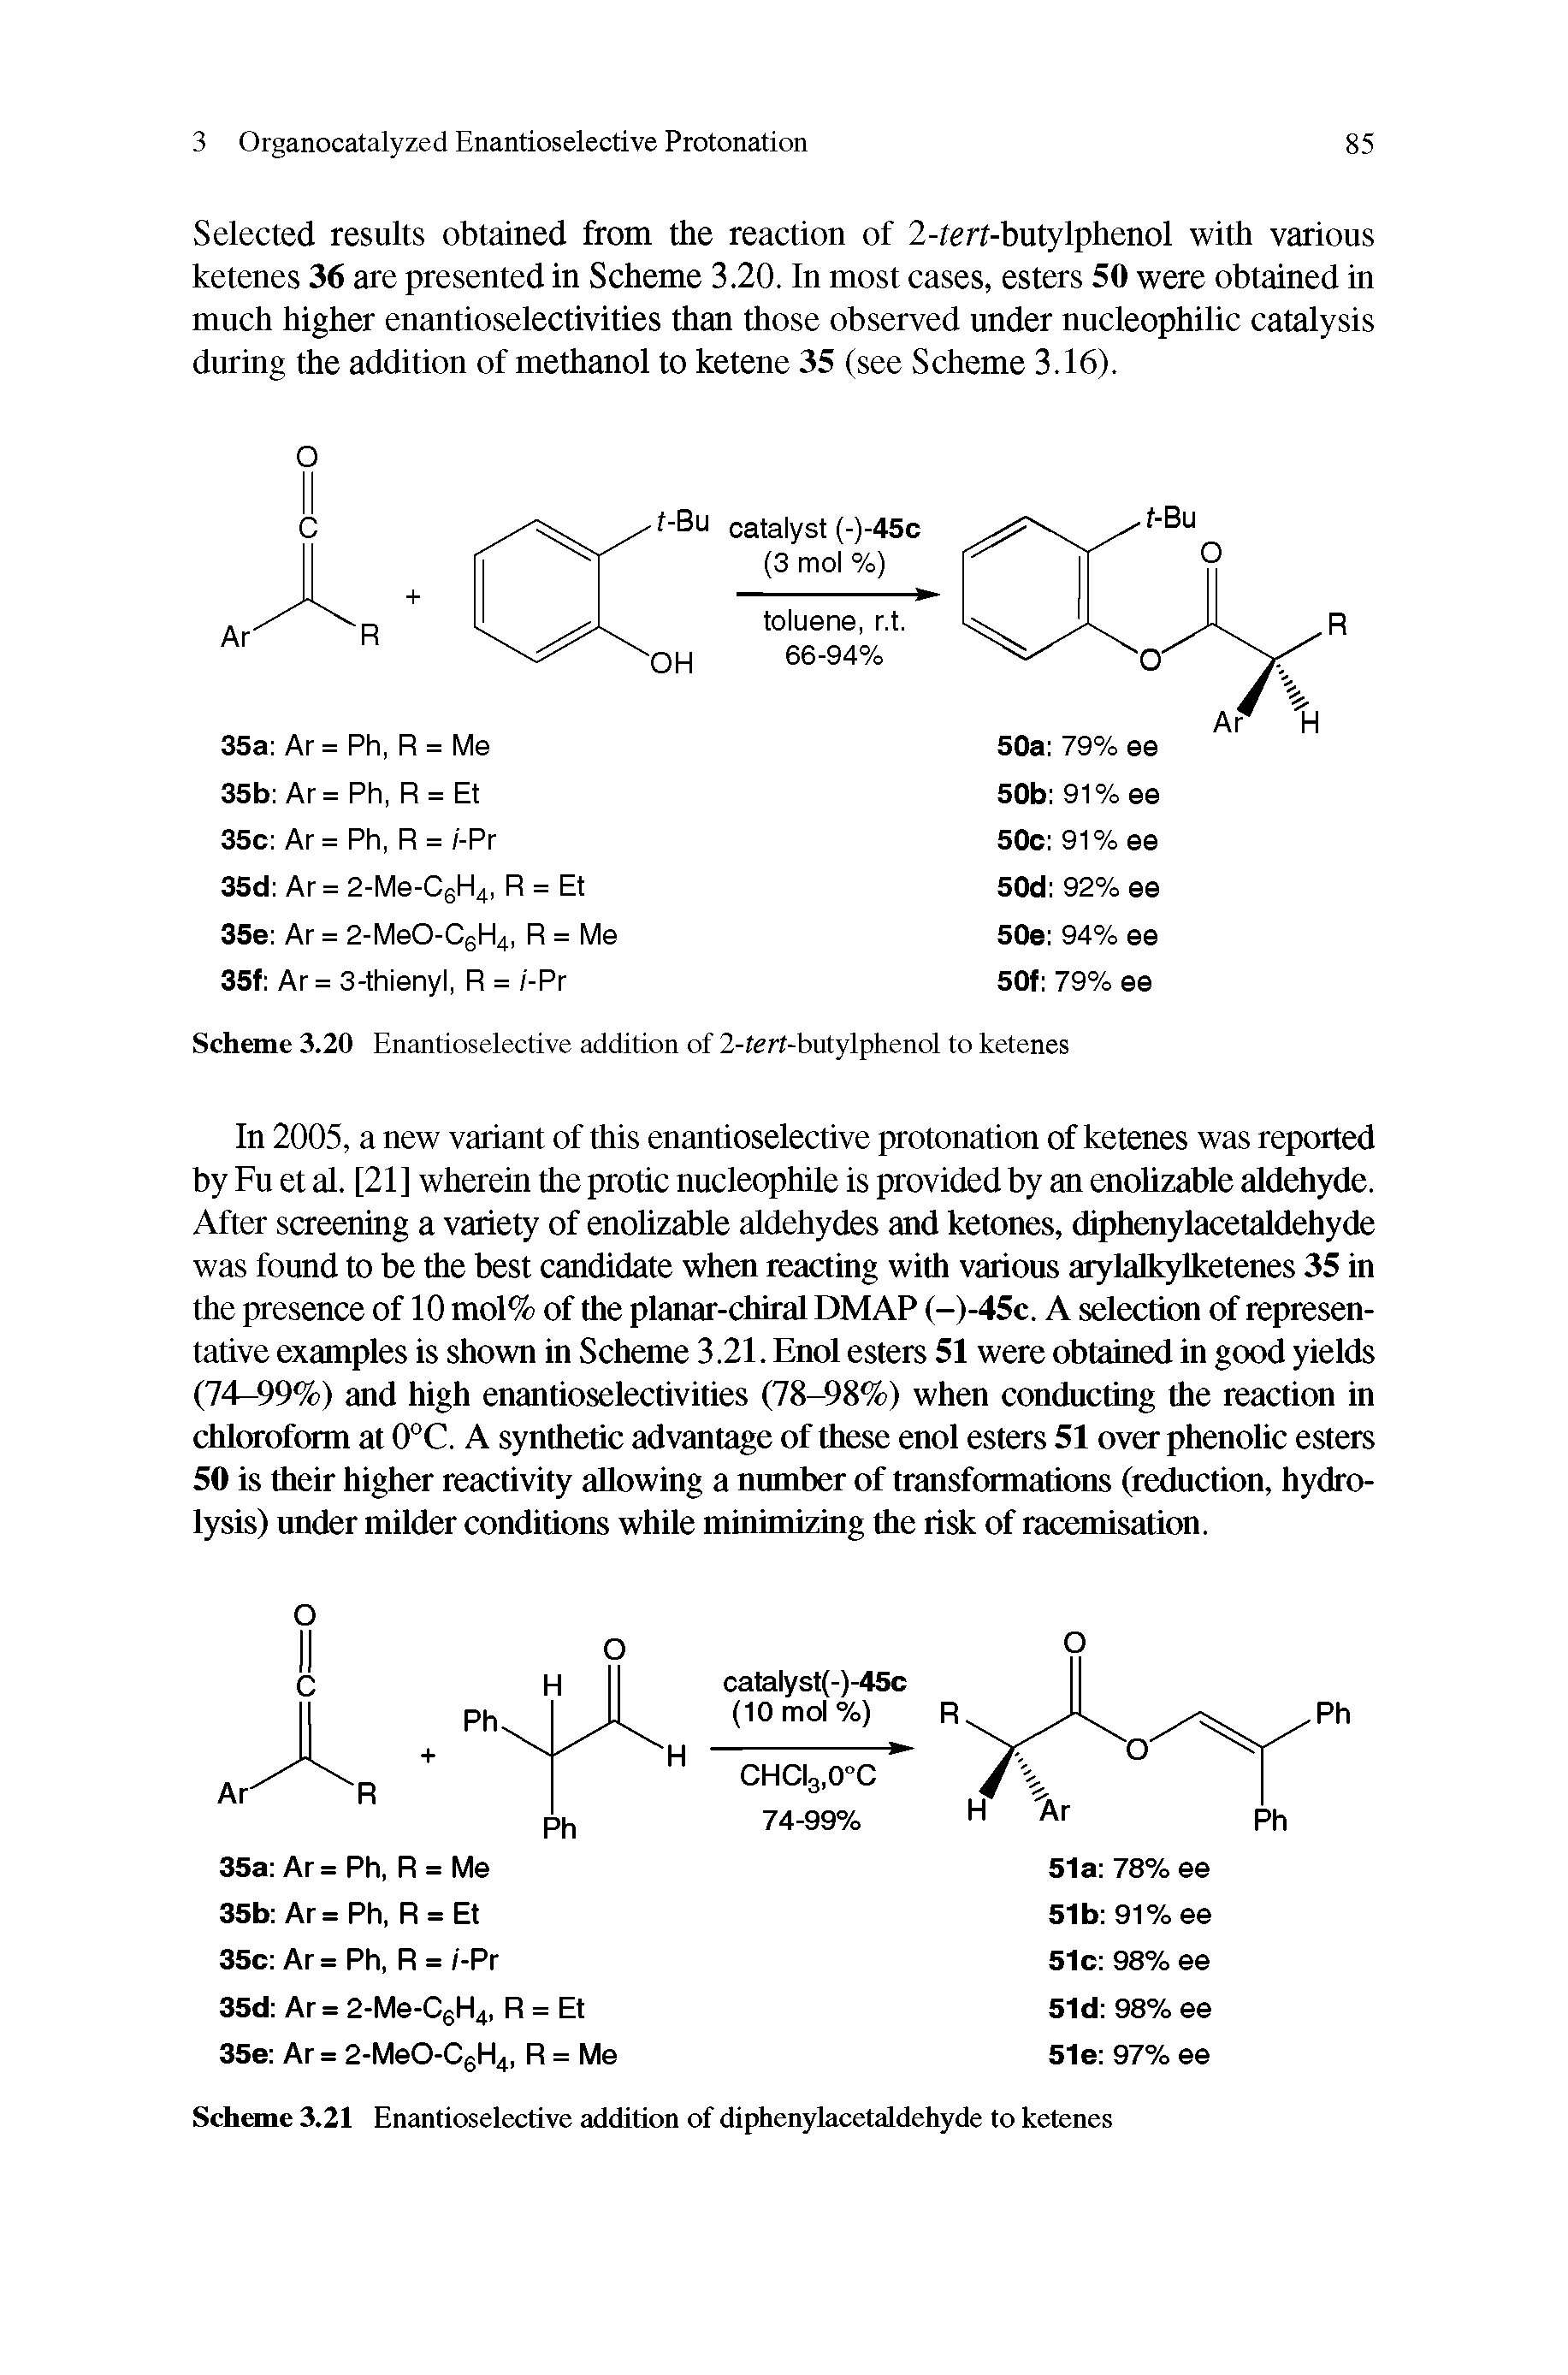 Scheme 3.20 Enantioselective addition of 2-tert-butylphenol to ketenes...